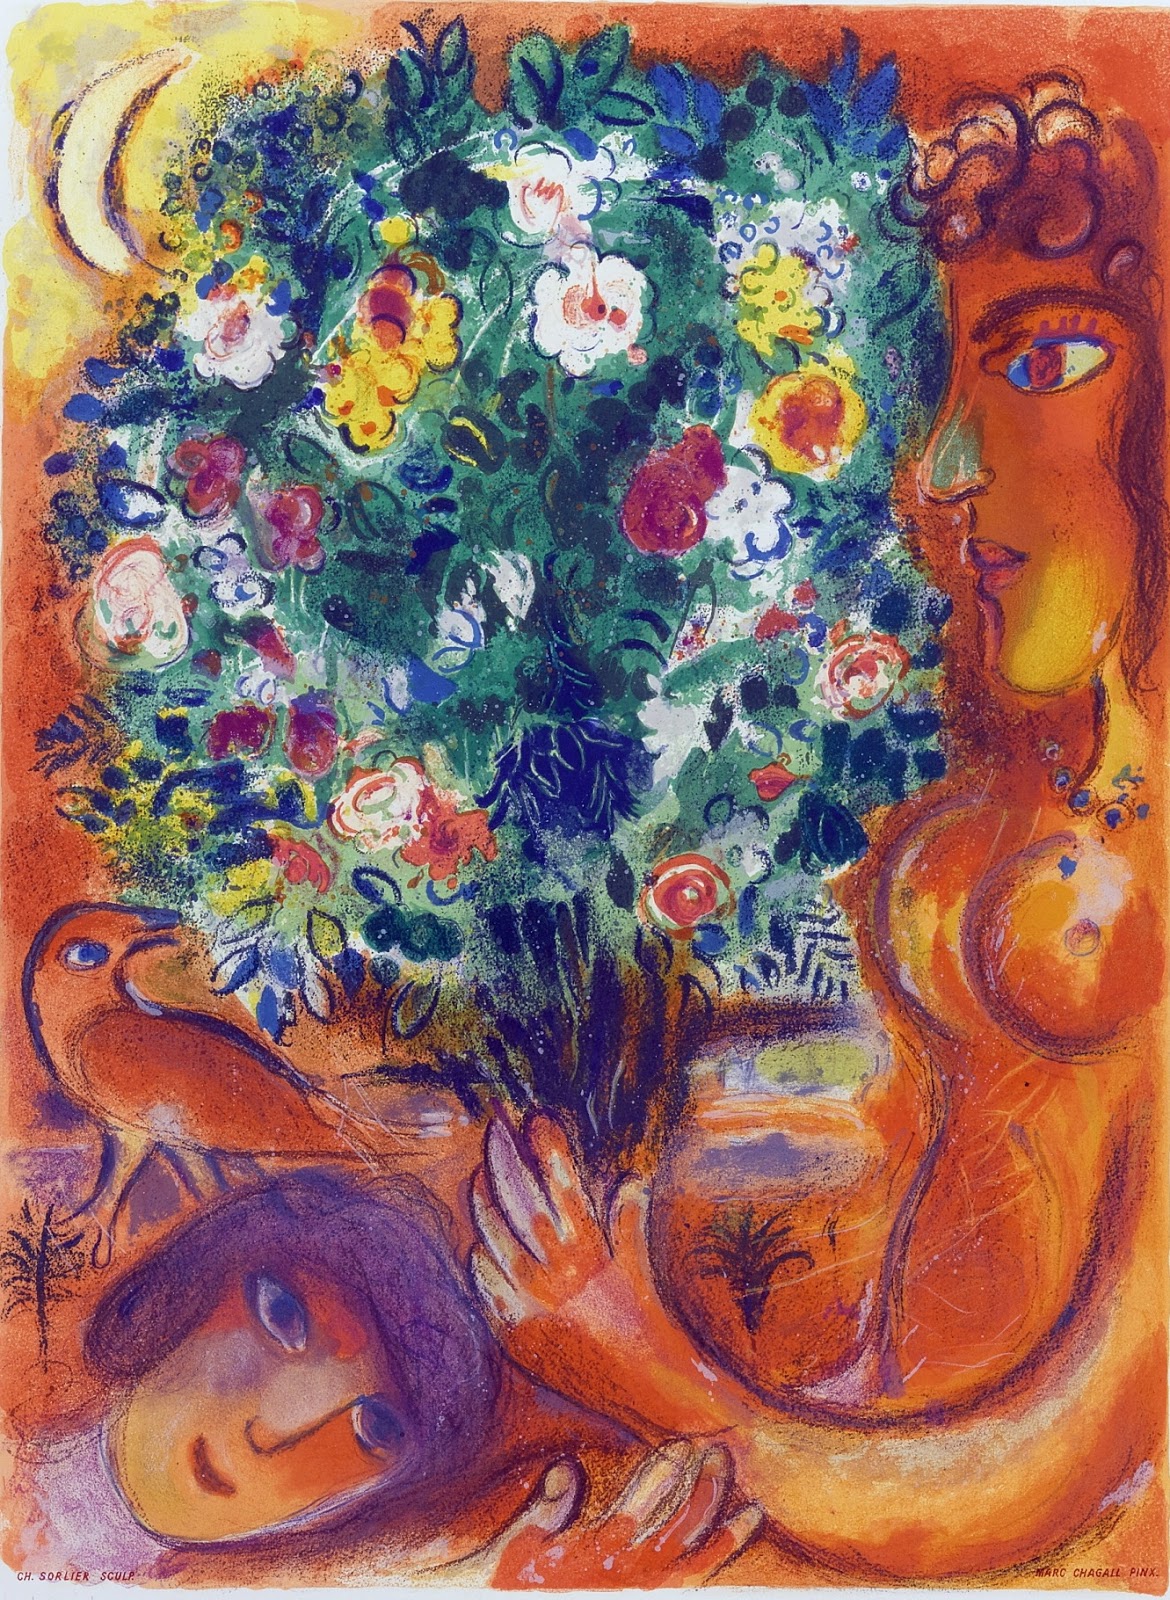 Marc+Chagall-1887-1985 (234).jpg